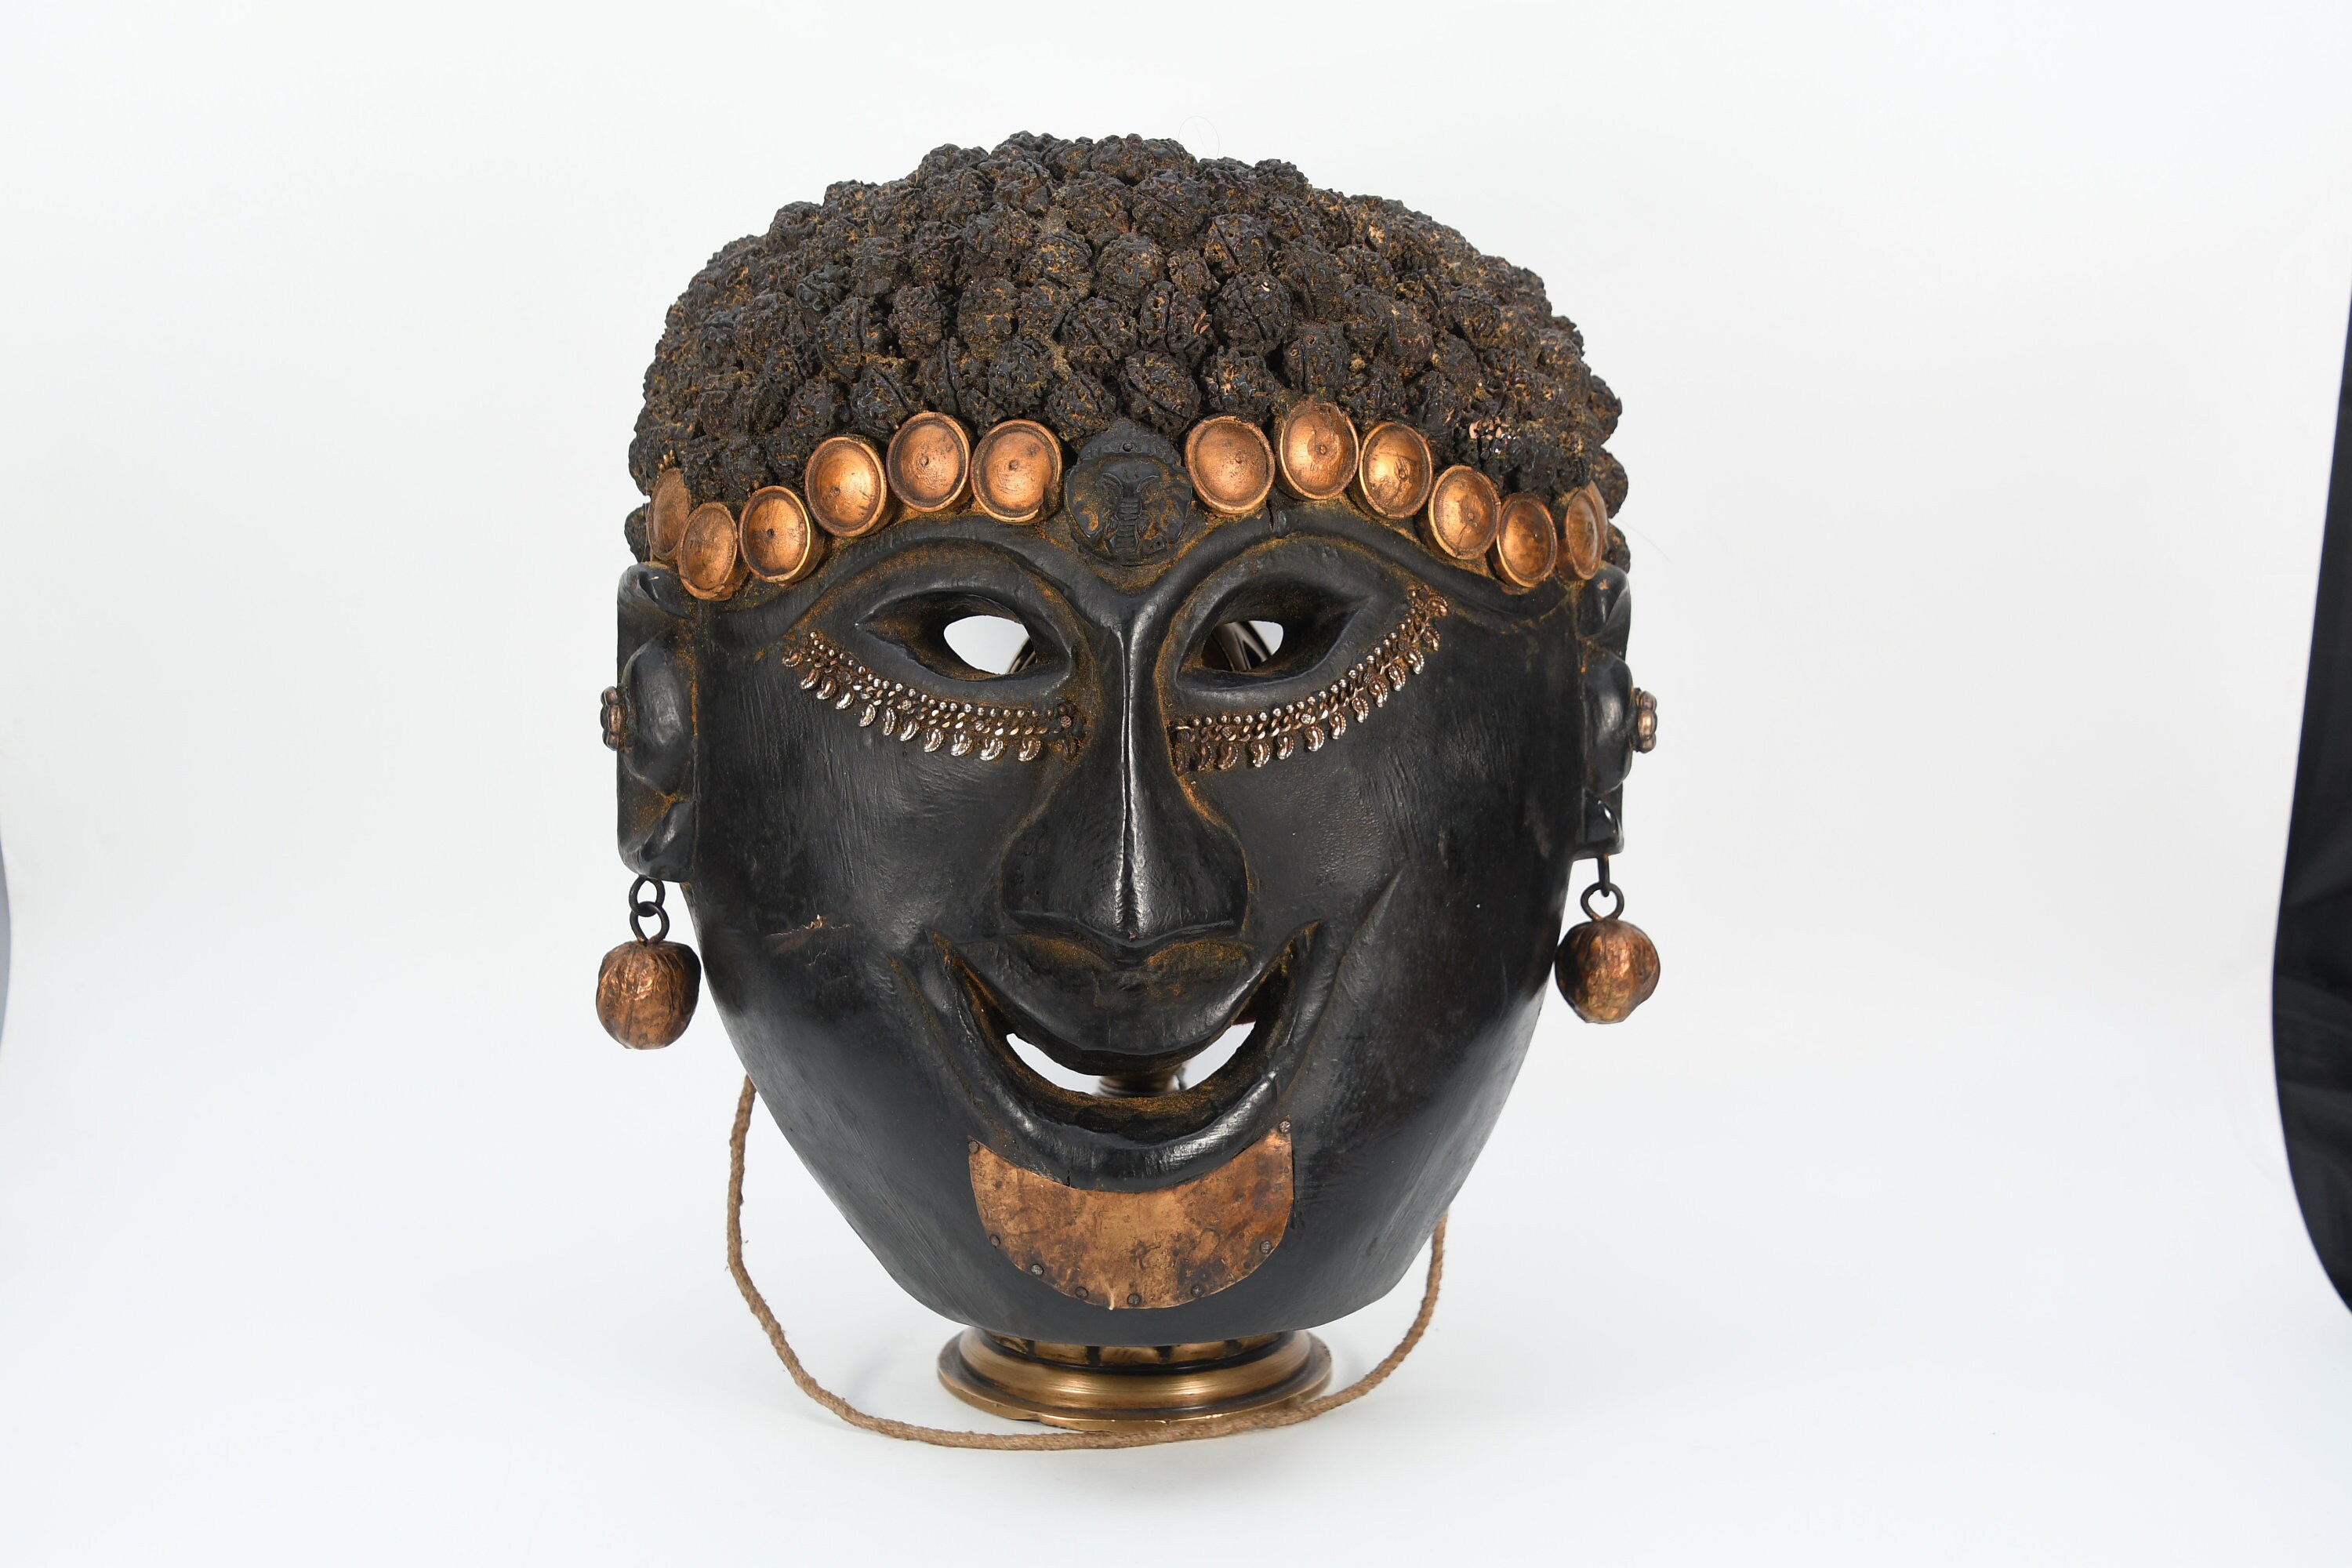 Exorcism Tibetan Antique Used Tribal Ritual Old Decorative Shaman Mask Gift Decor vintage shaman mask black.naturalforma.com.br